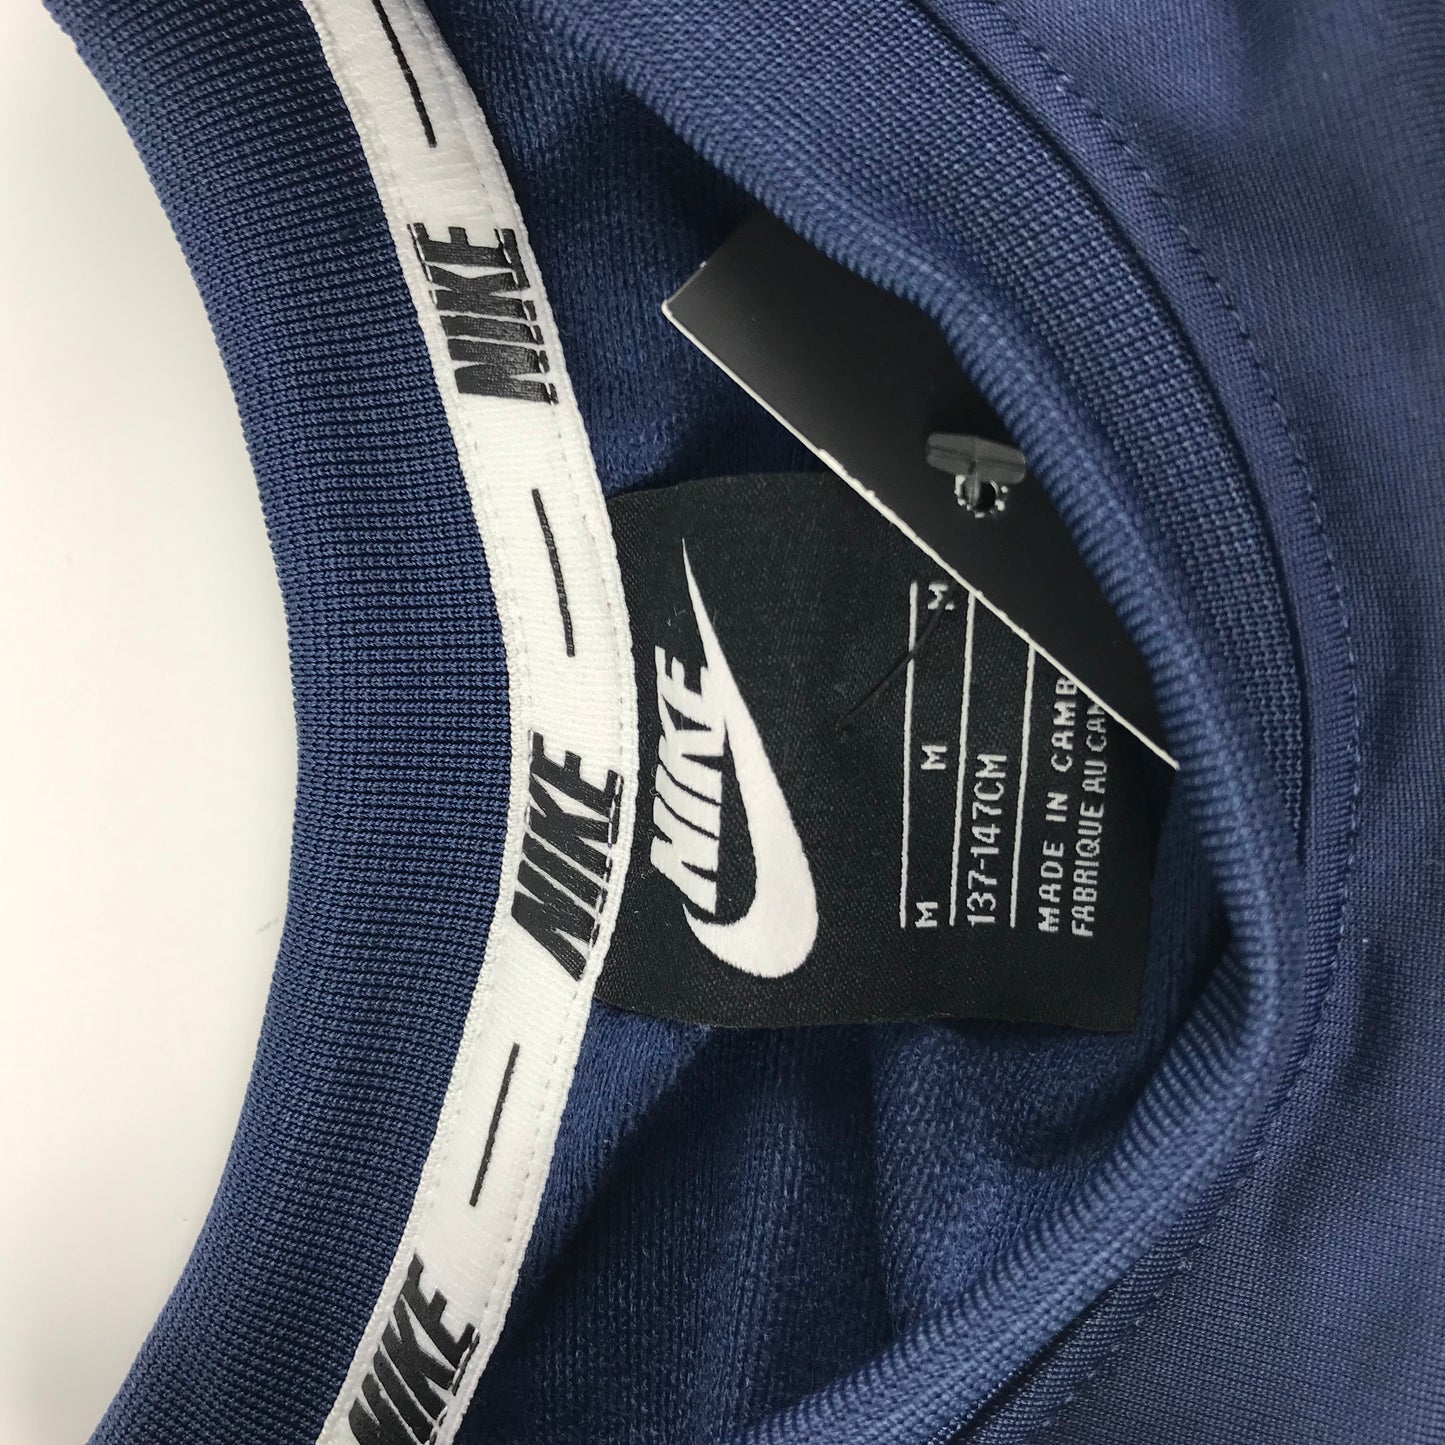 Nike Sweater Age 9-11 Navy White Panelled Long Sleeve